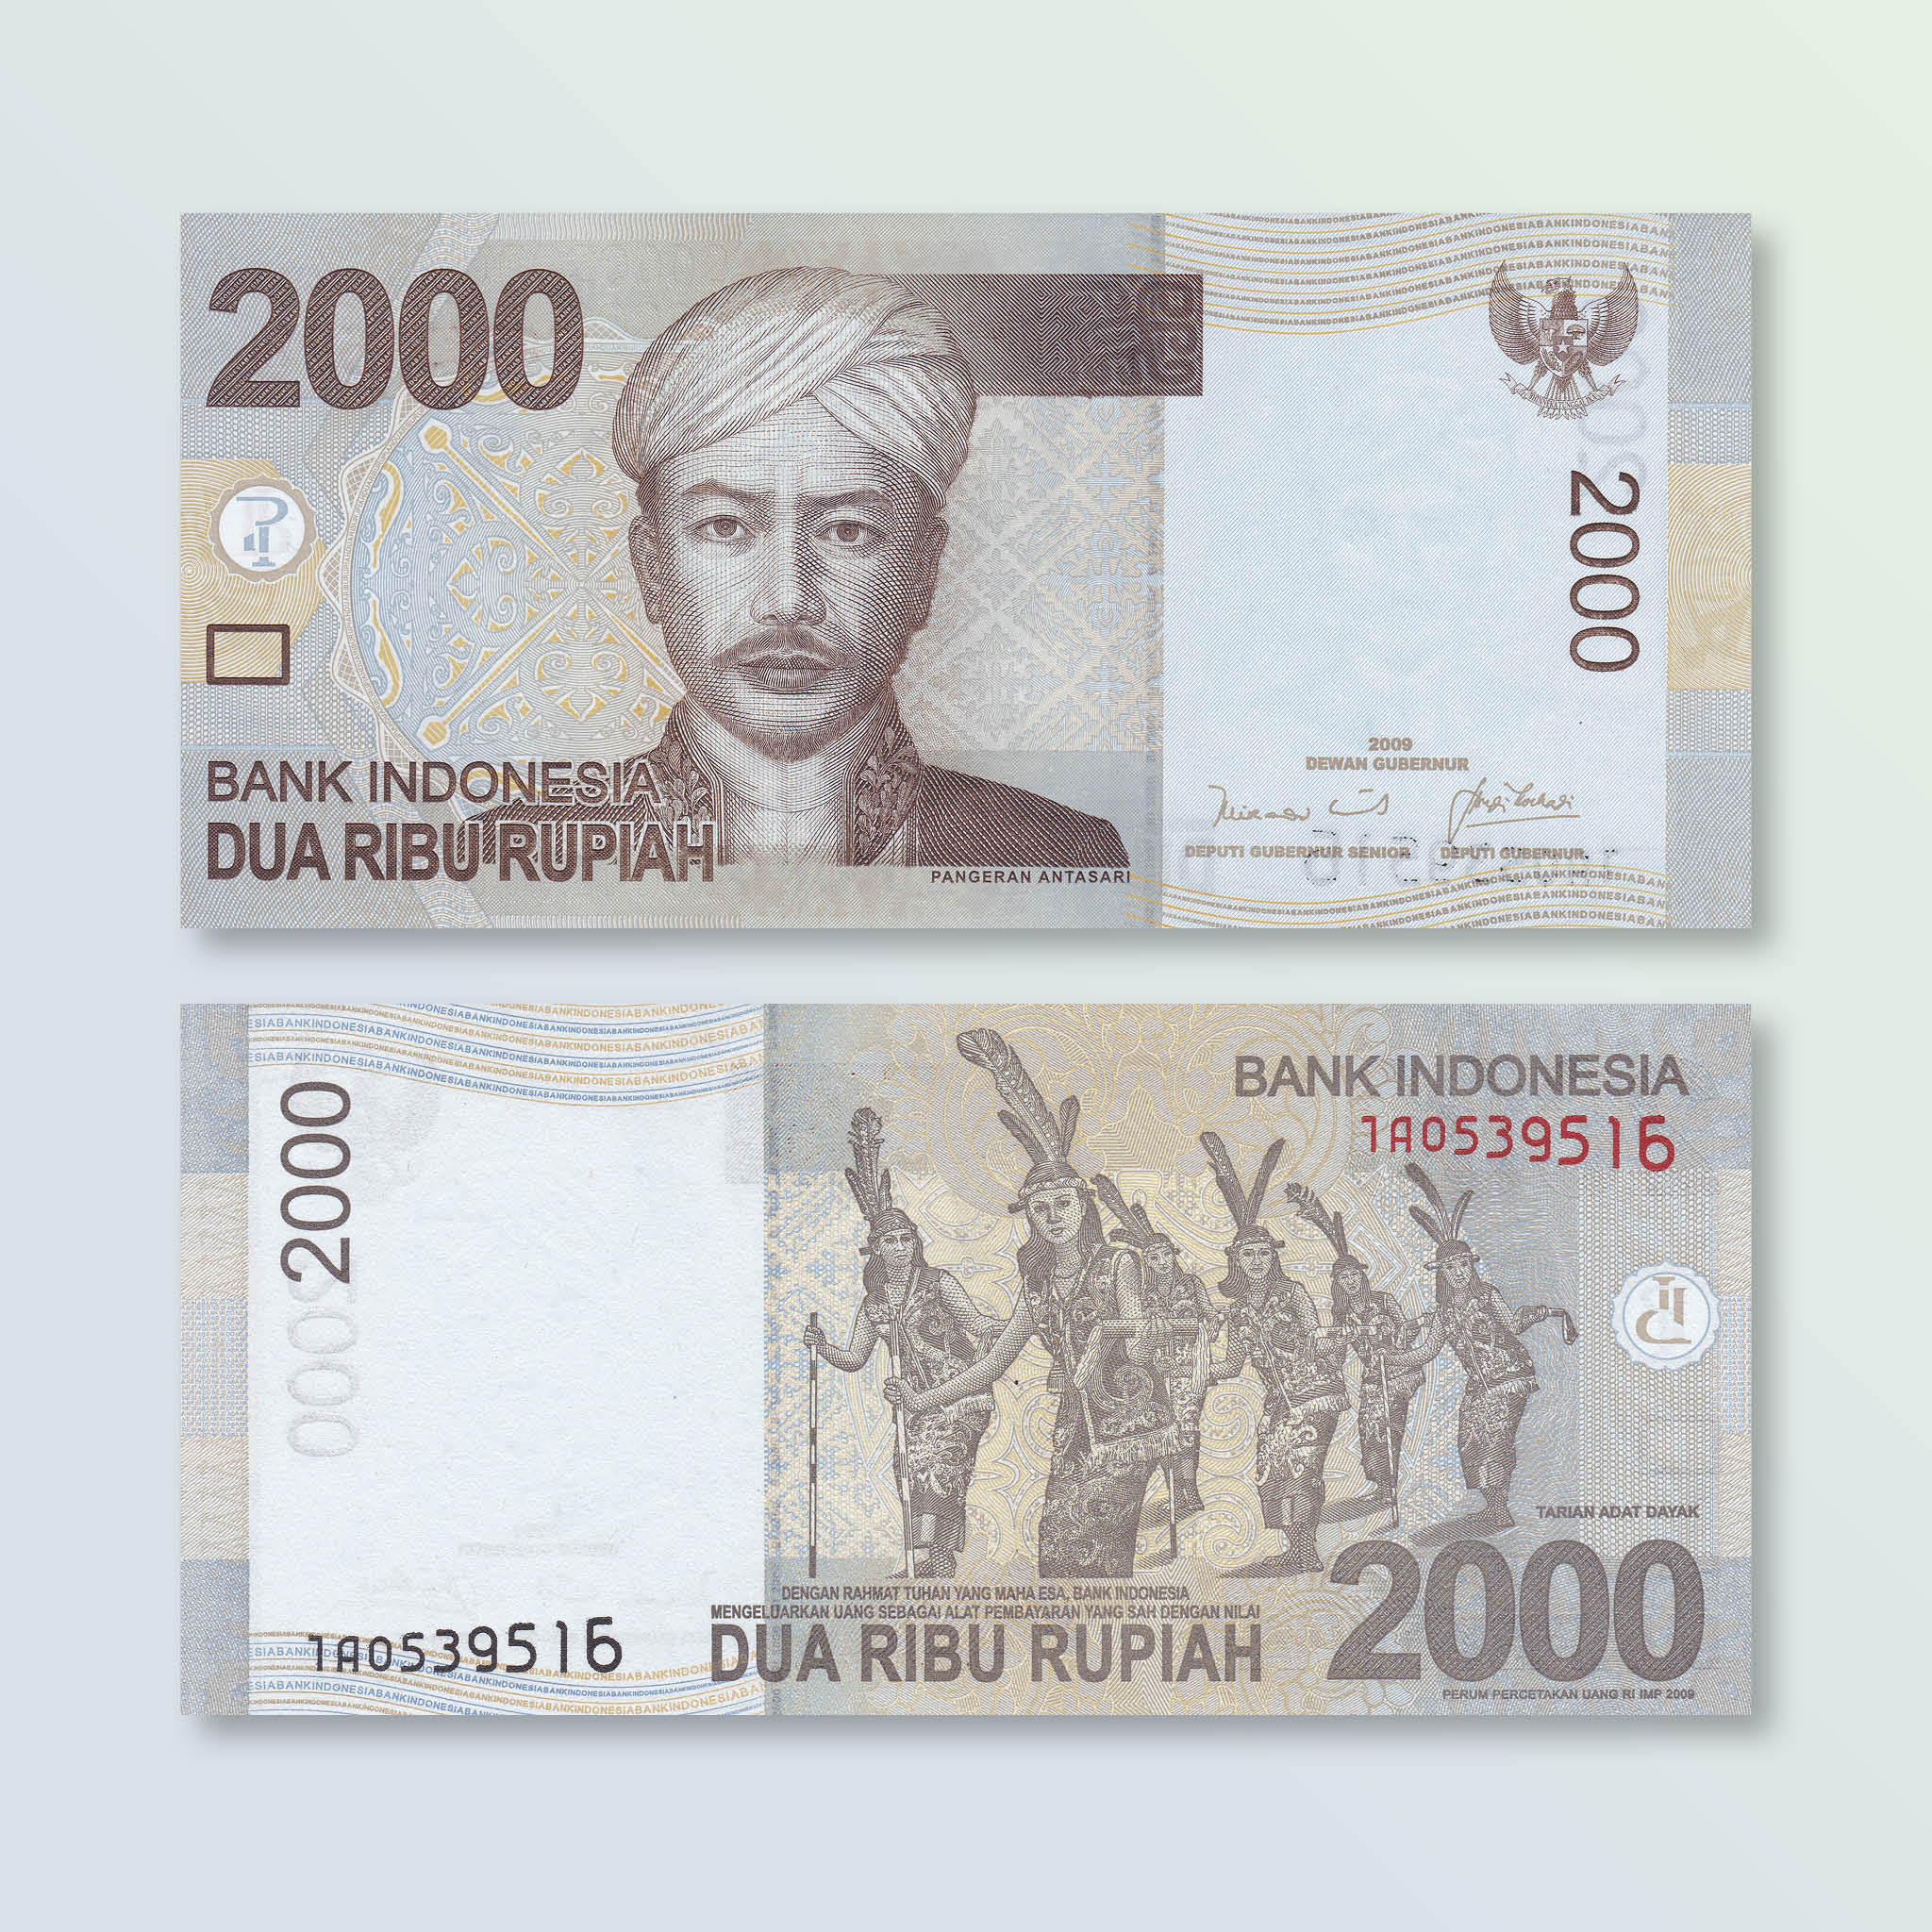 Indonesia 2000 Rupiah, 2009/2009, B598a, P148a, UNC - Robert's World Money - World Banknotes